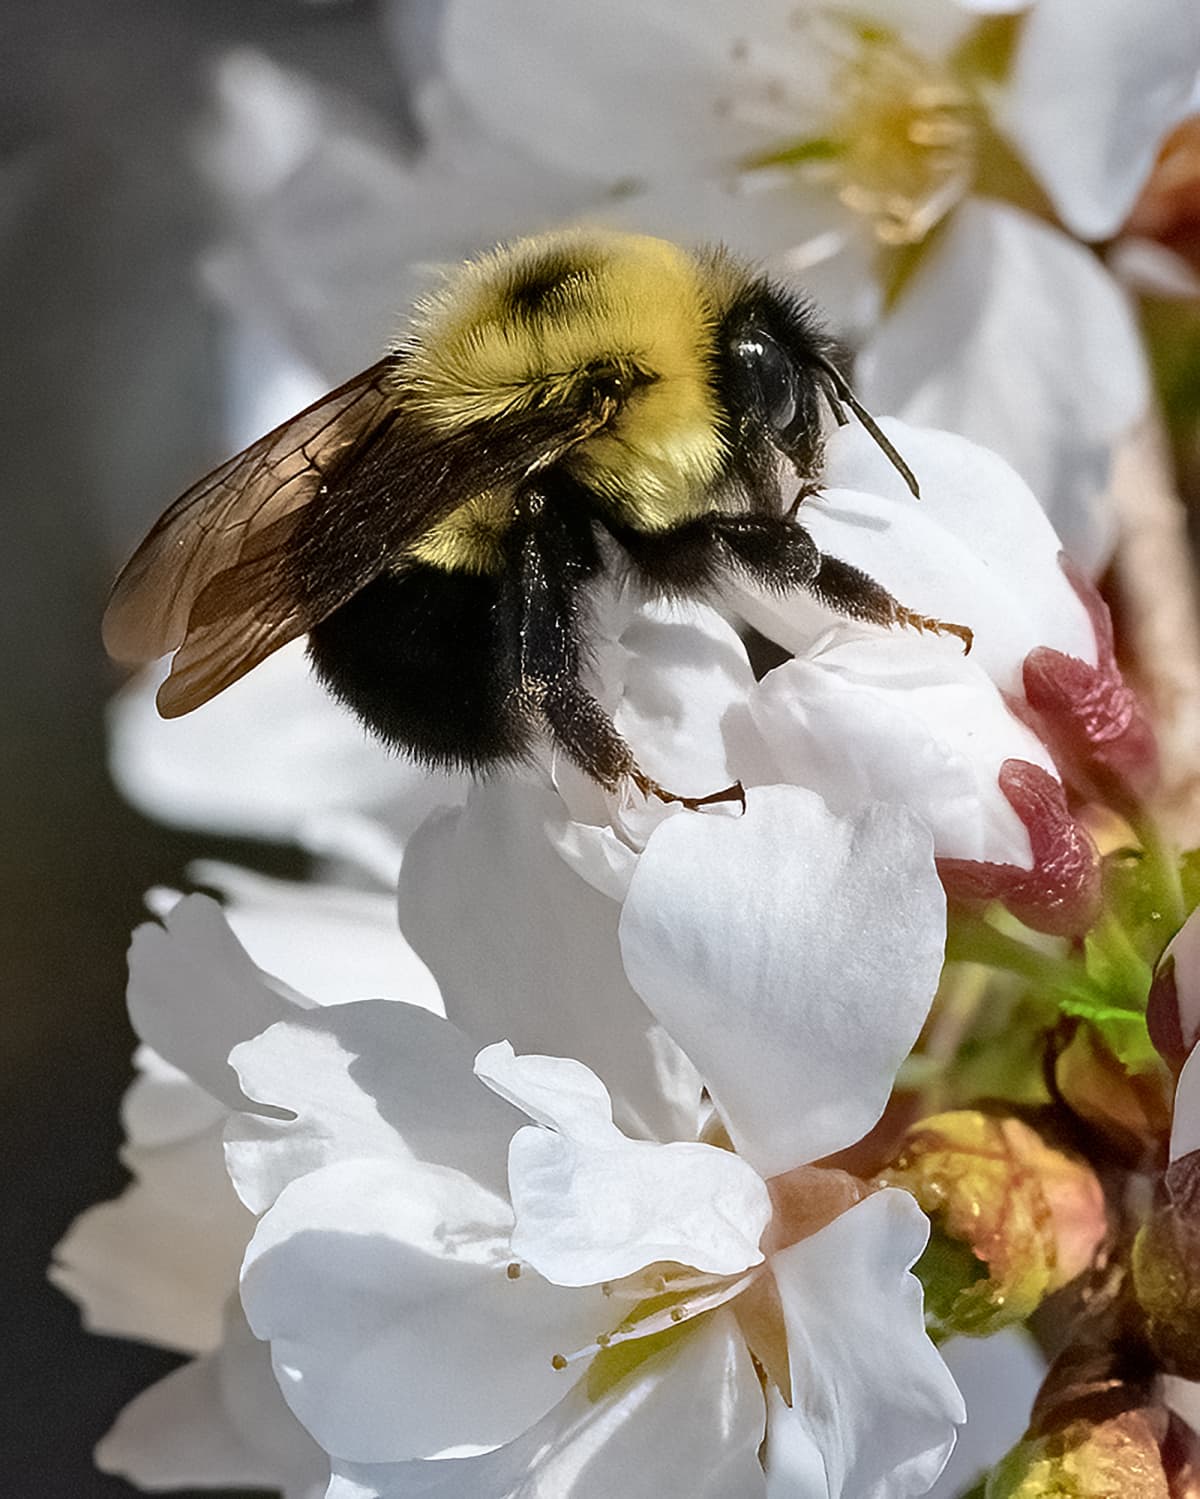 Bee on flower.